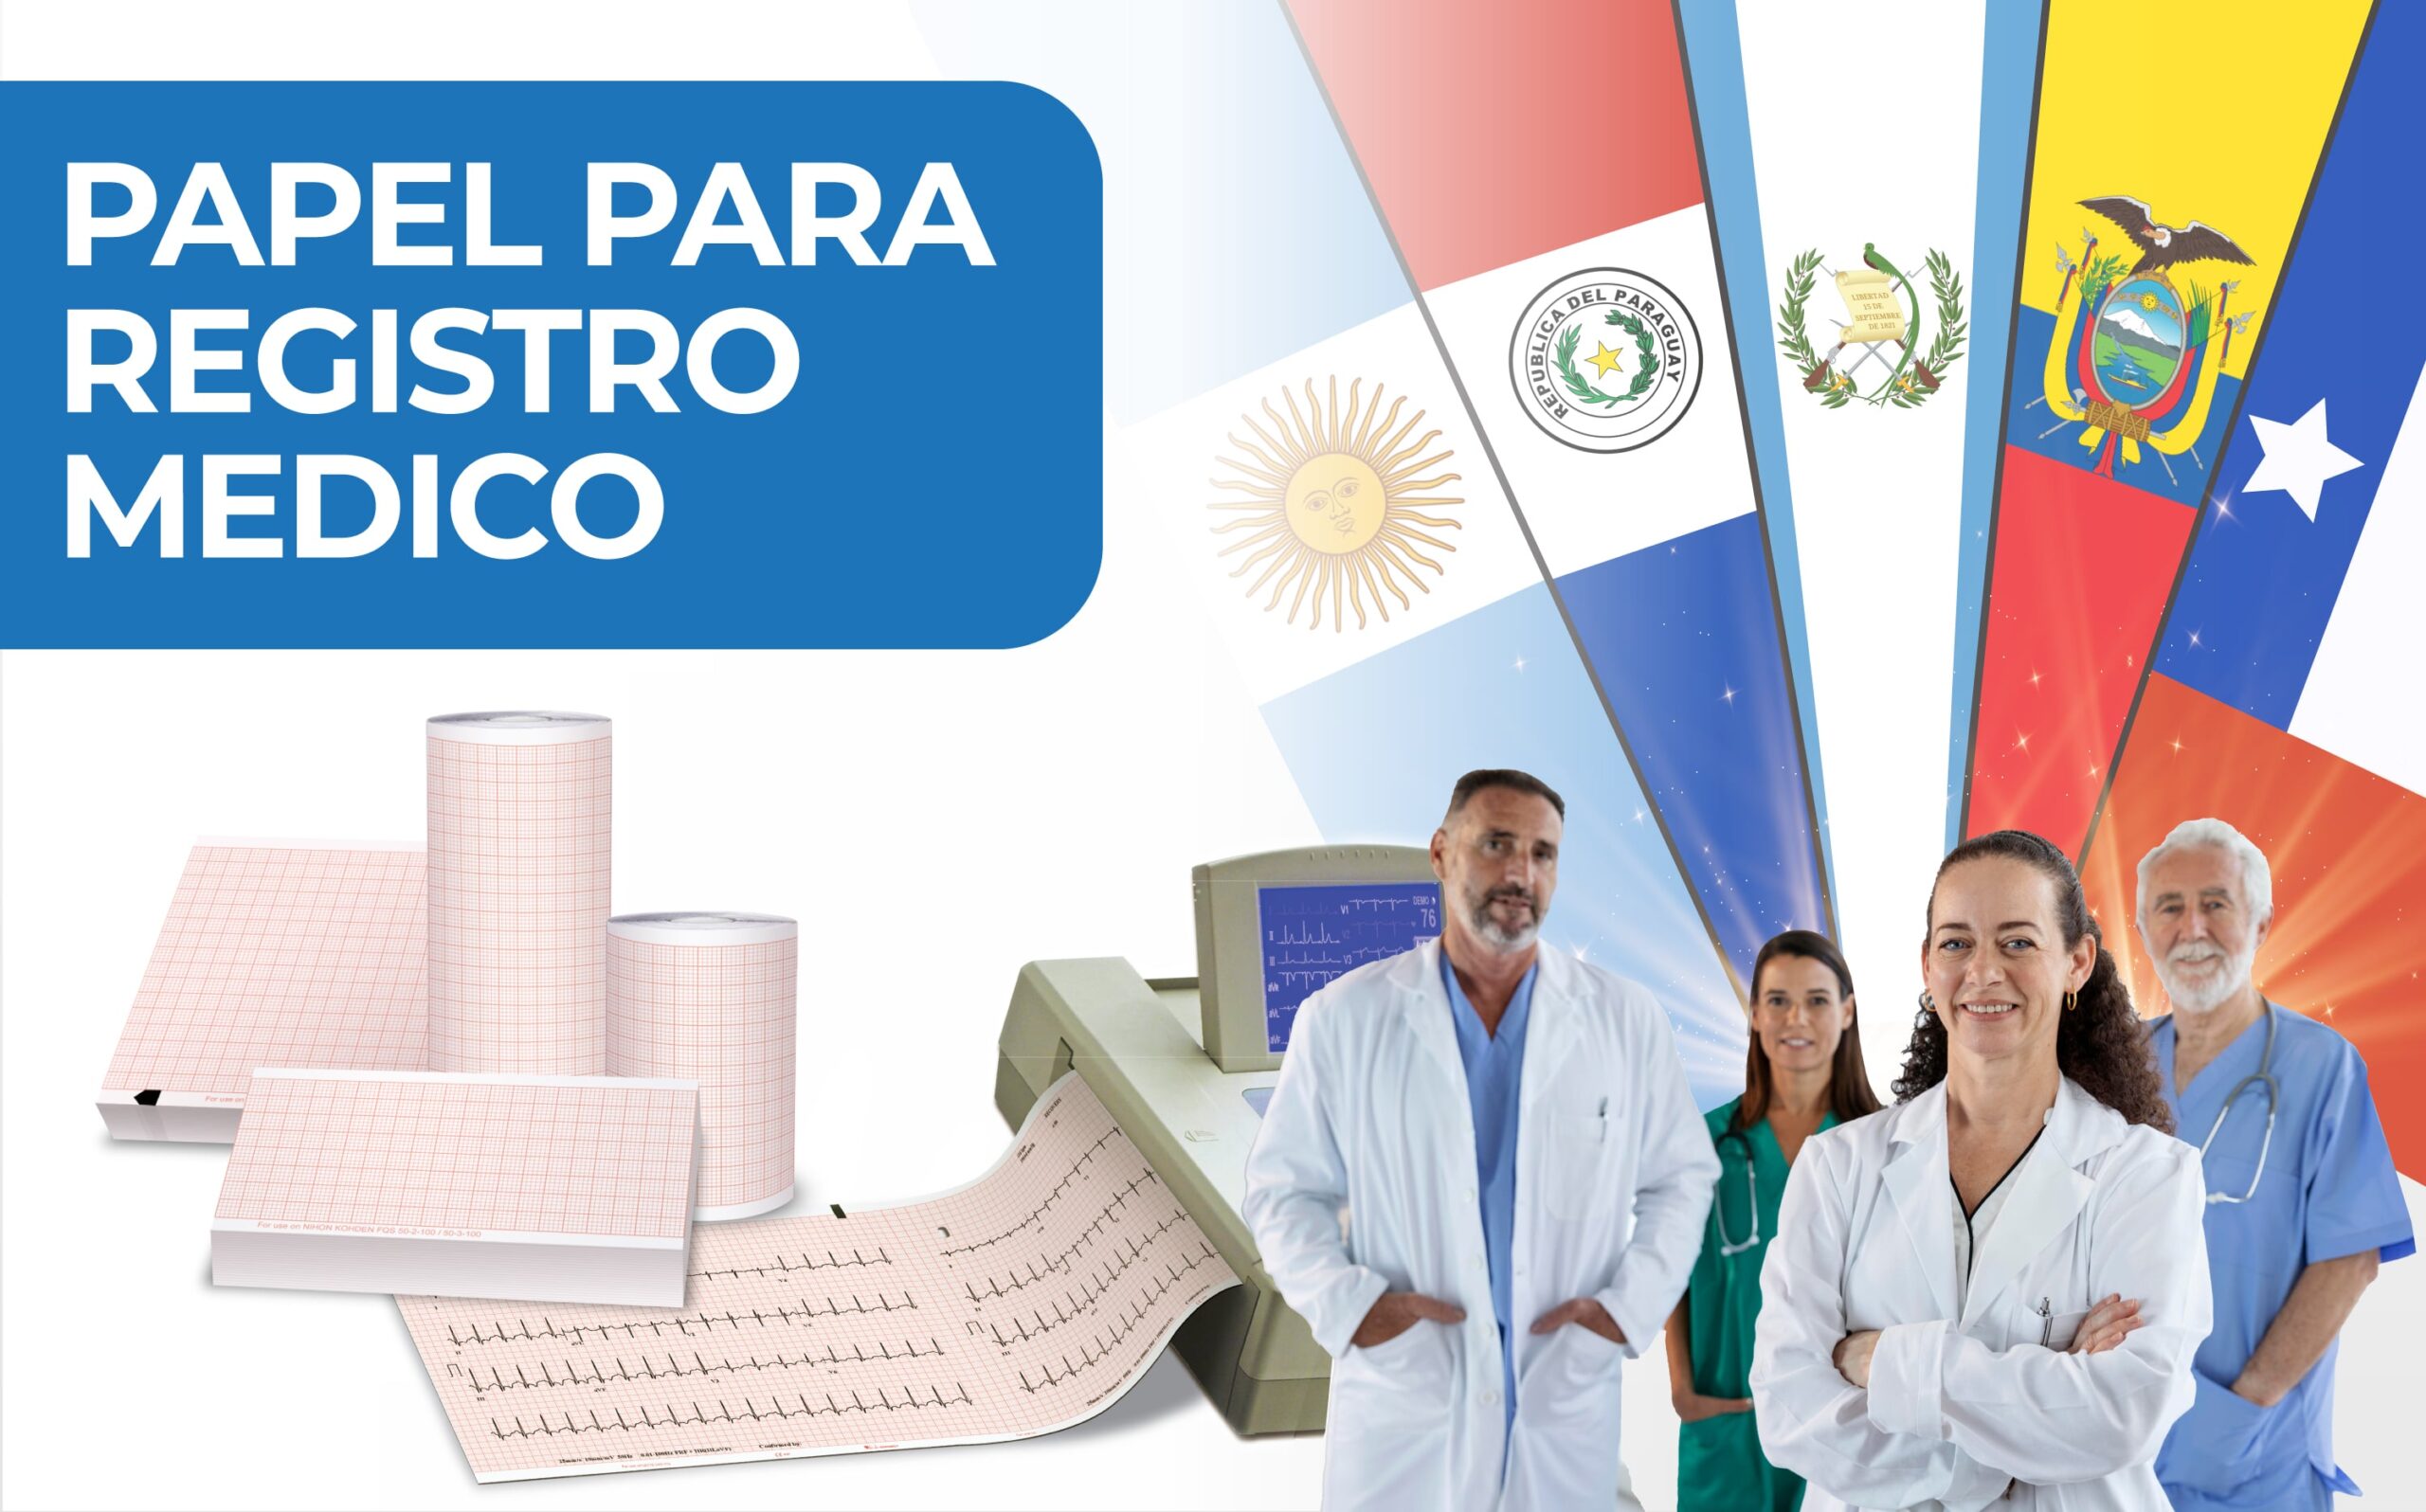 Papel Para Registro Medico Or ECG Paper In Latin America